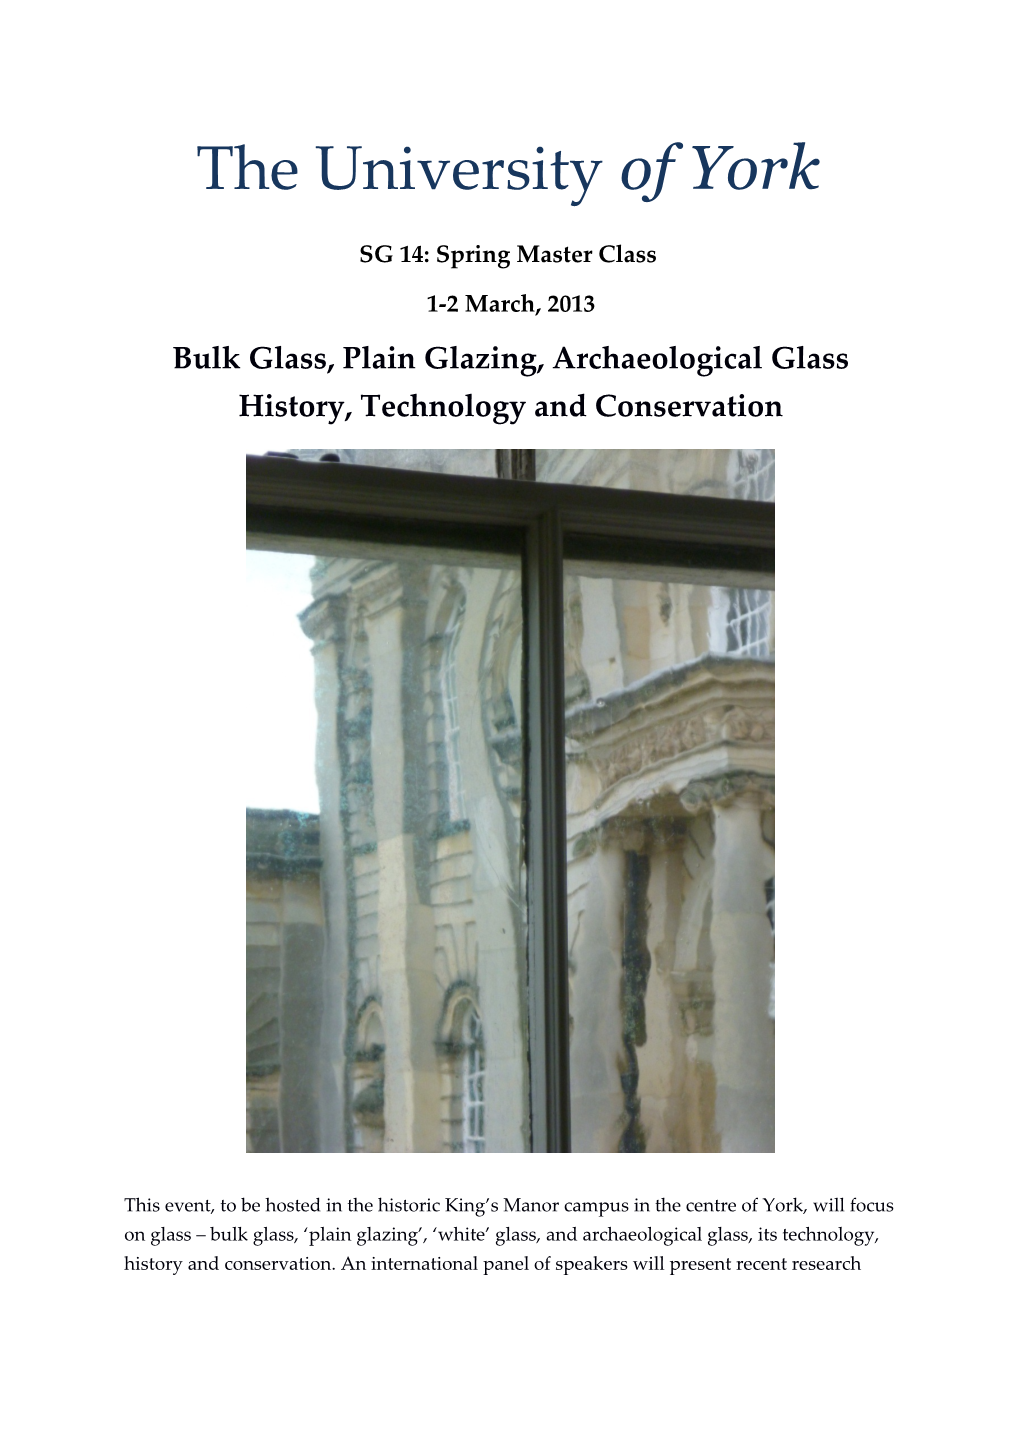 Bulk Glass, Plain Glazing, Archaeological Glass History, Technology and Conservation